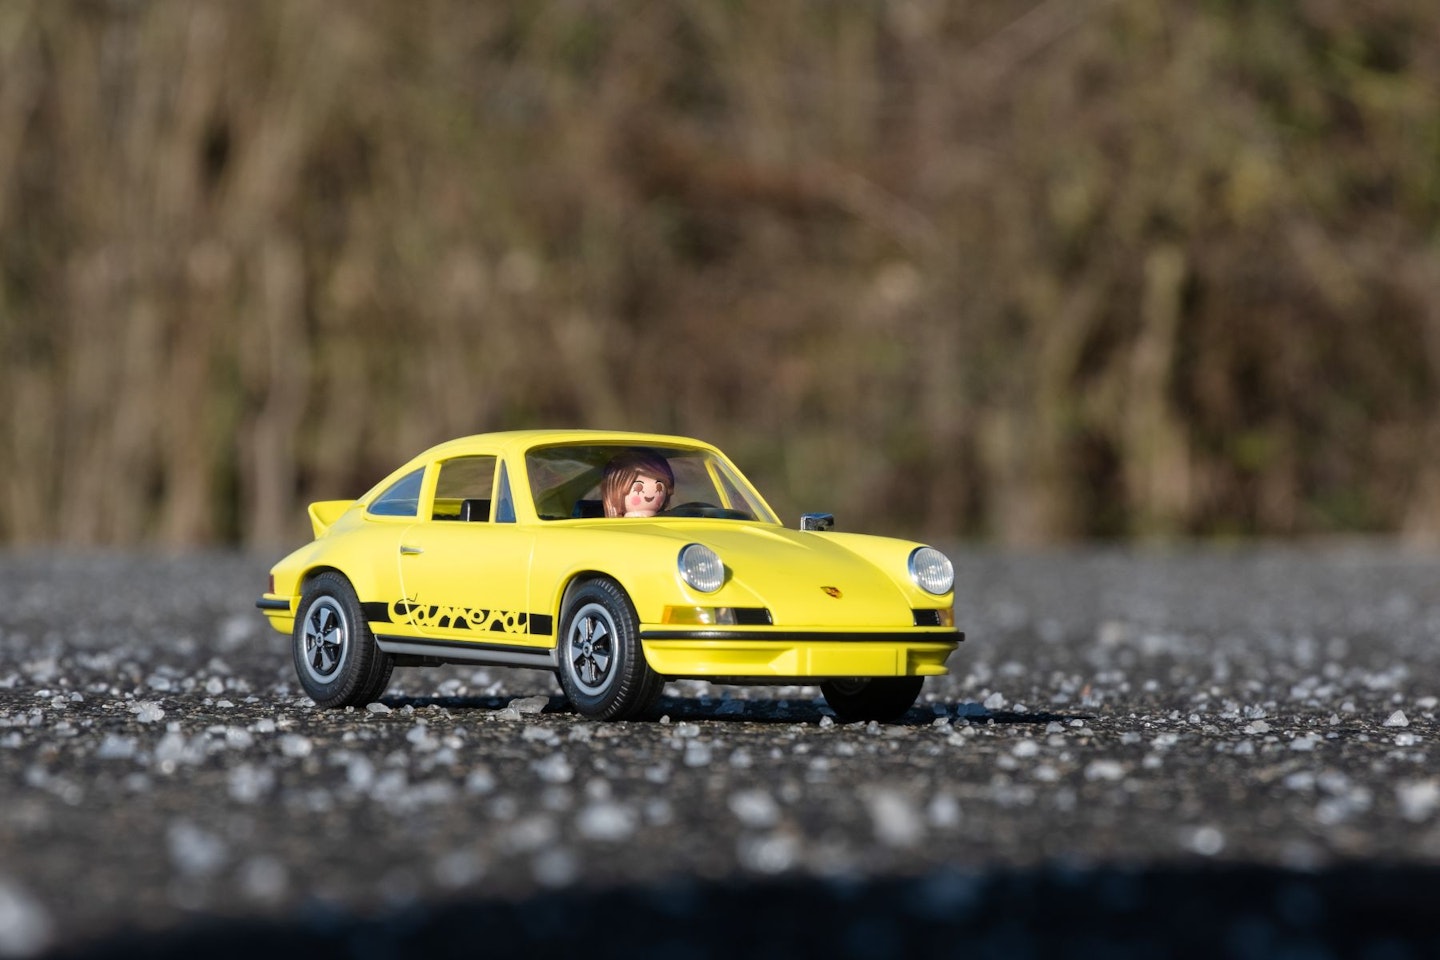 Playmobil Porsche 911 Carrera RS 2.7: Quick review